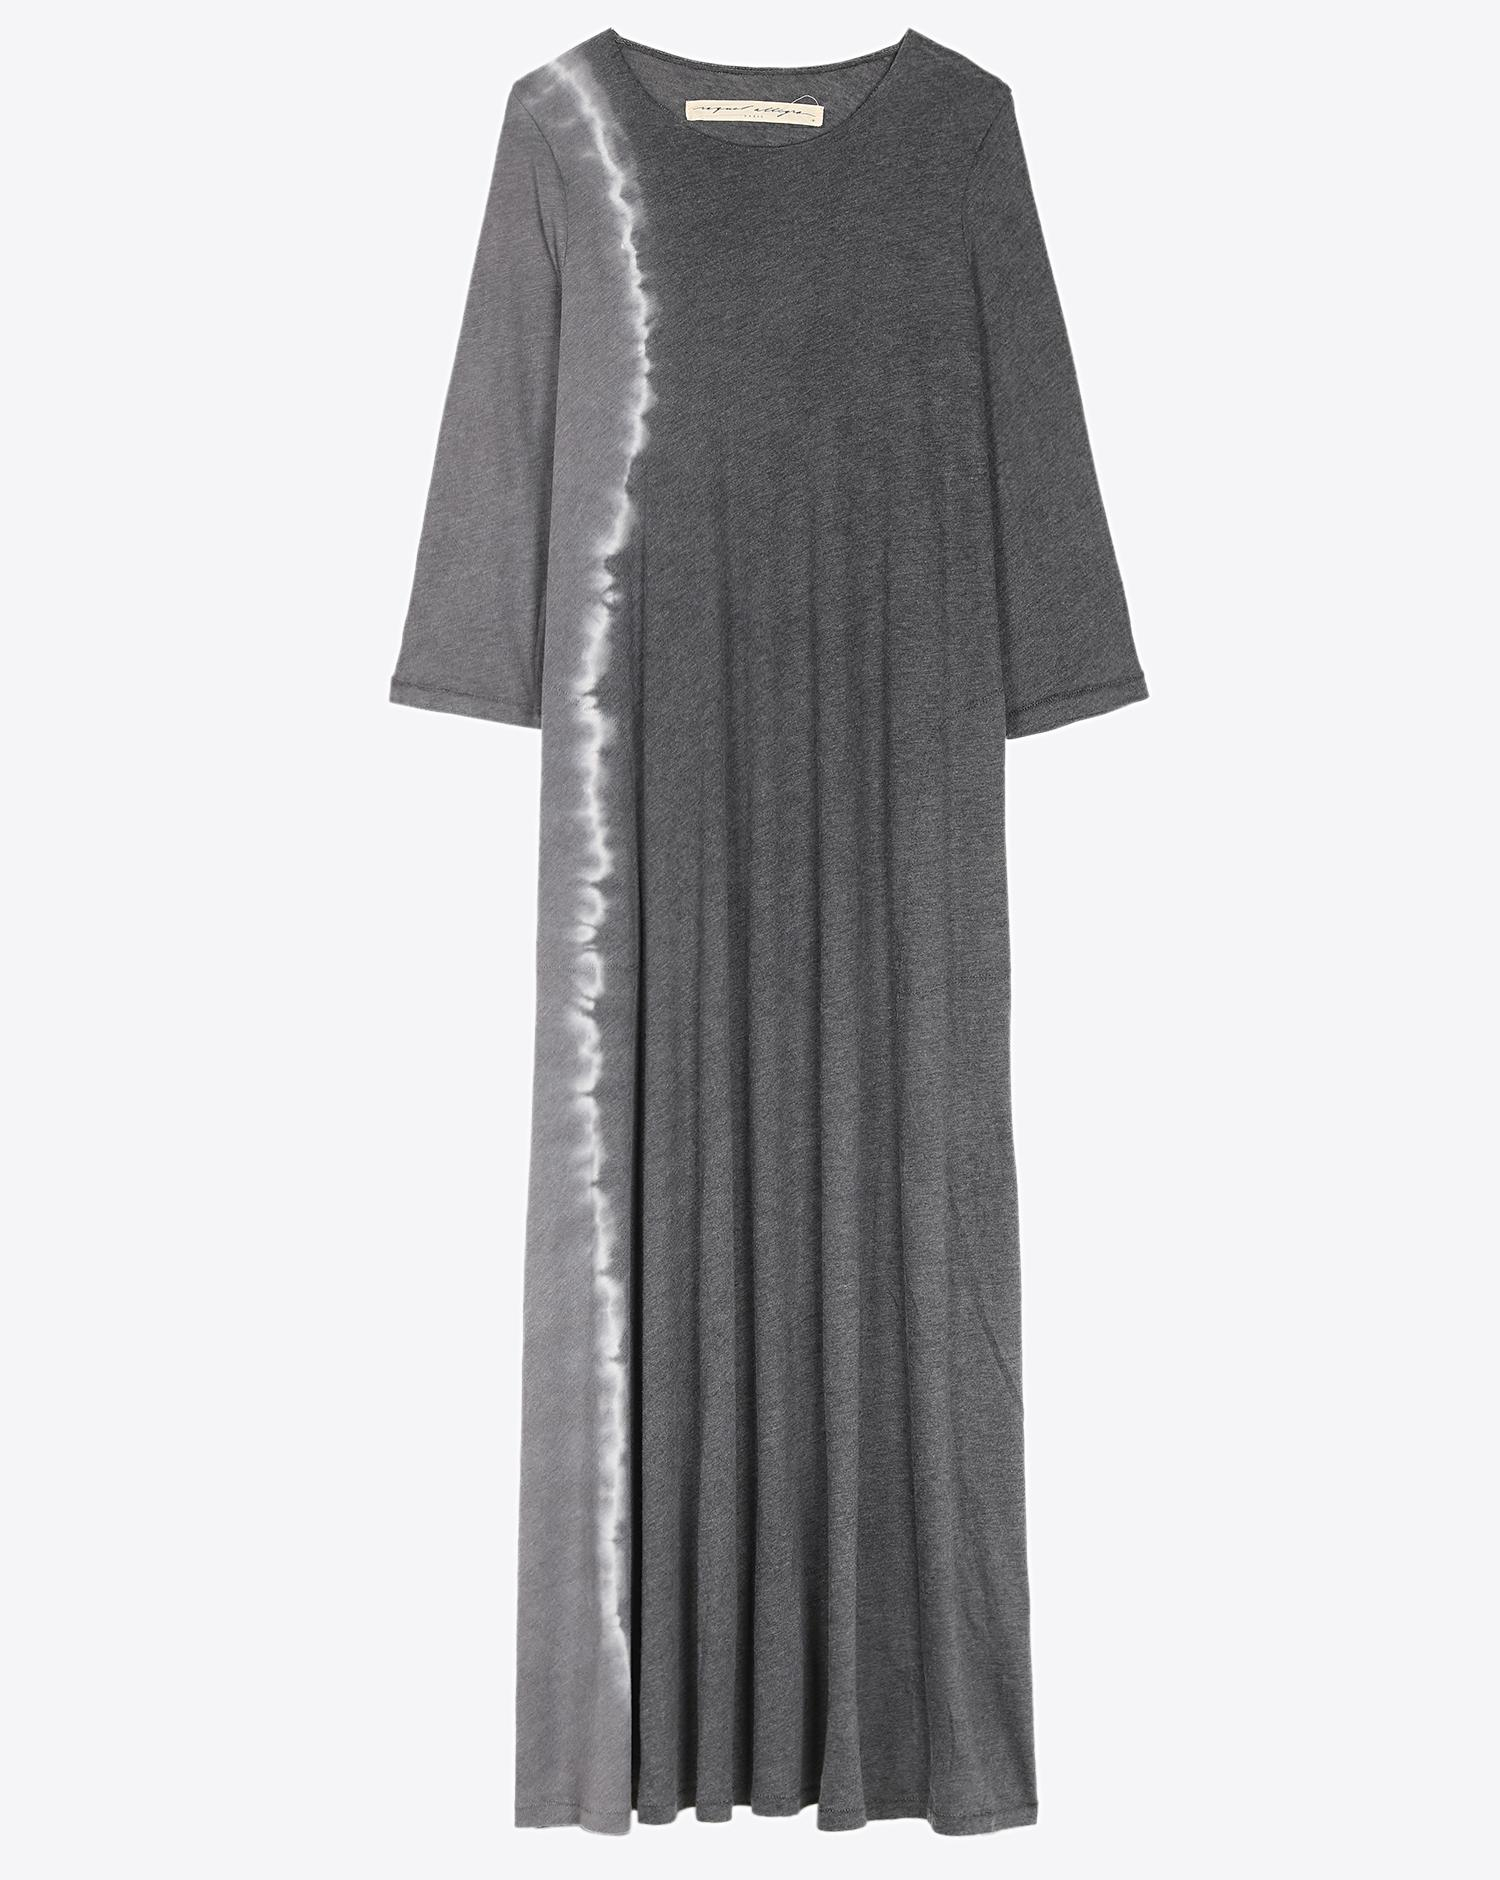 Raquel Allegra Pré-Collection 12 Sleeve Drama Maxi Dress - Night Grey  